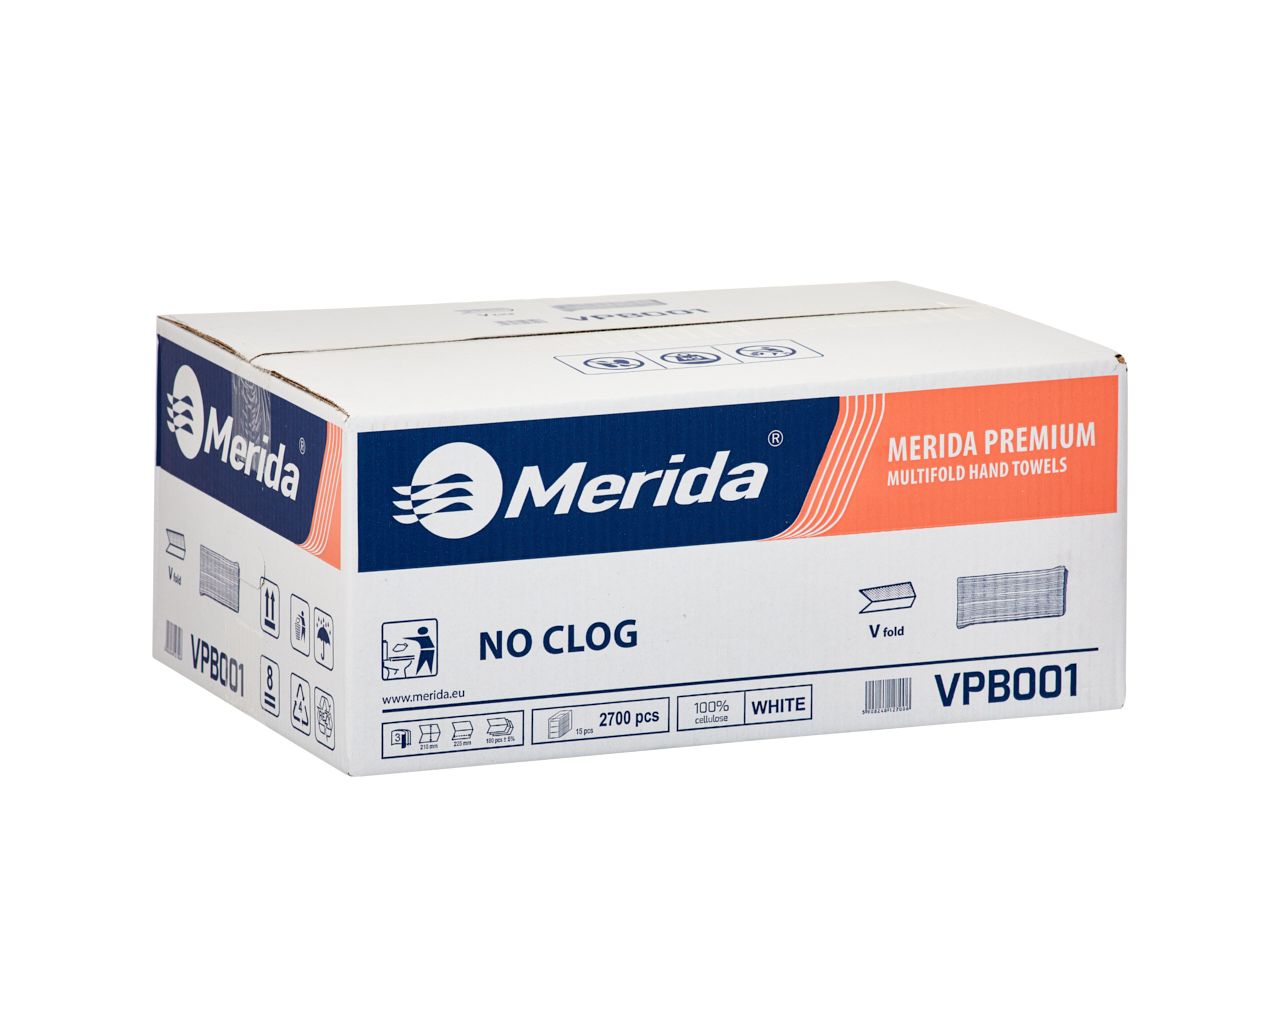 MERIDA PREMIUM NO CLOG interleaved paper towels, 3 -ply, 2700 pcs./ carton, white